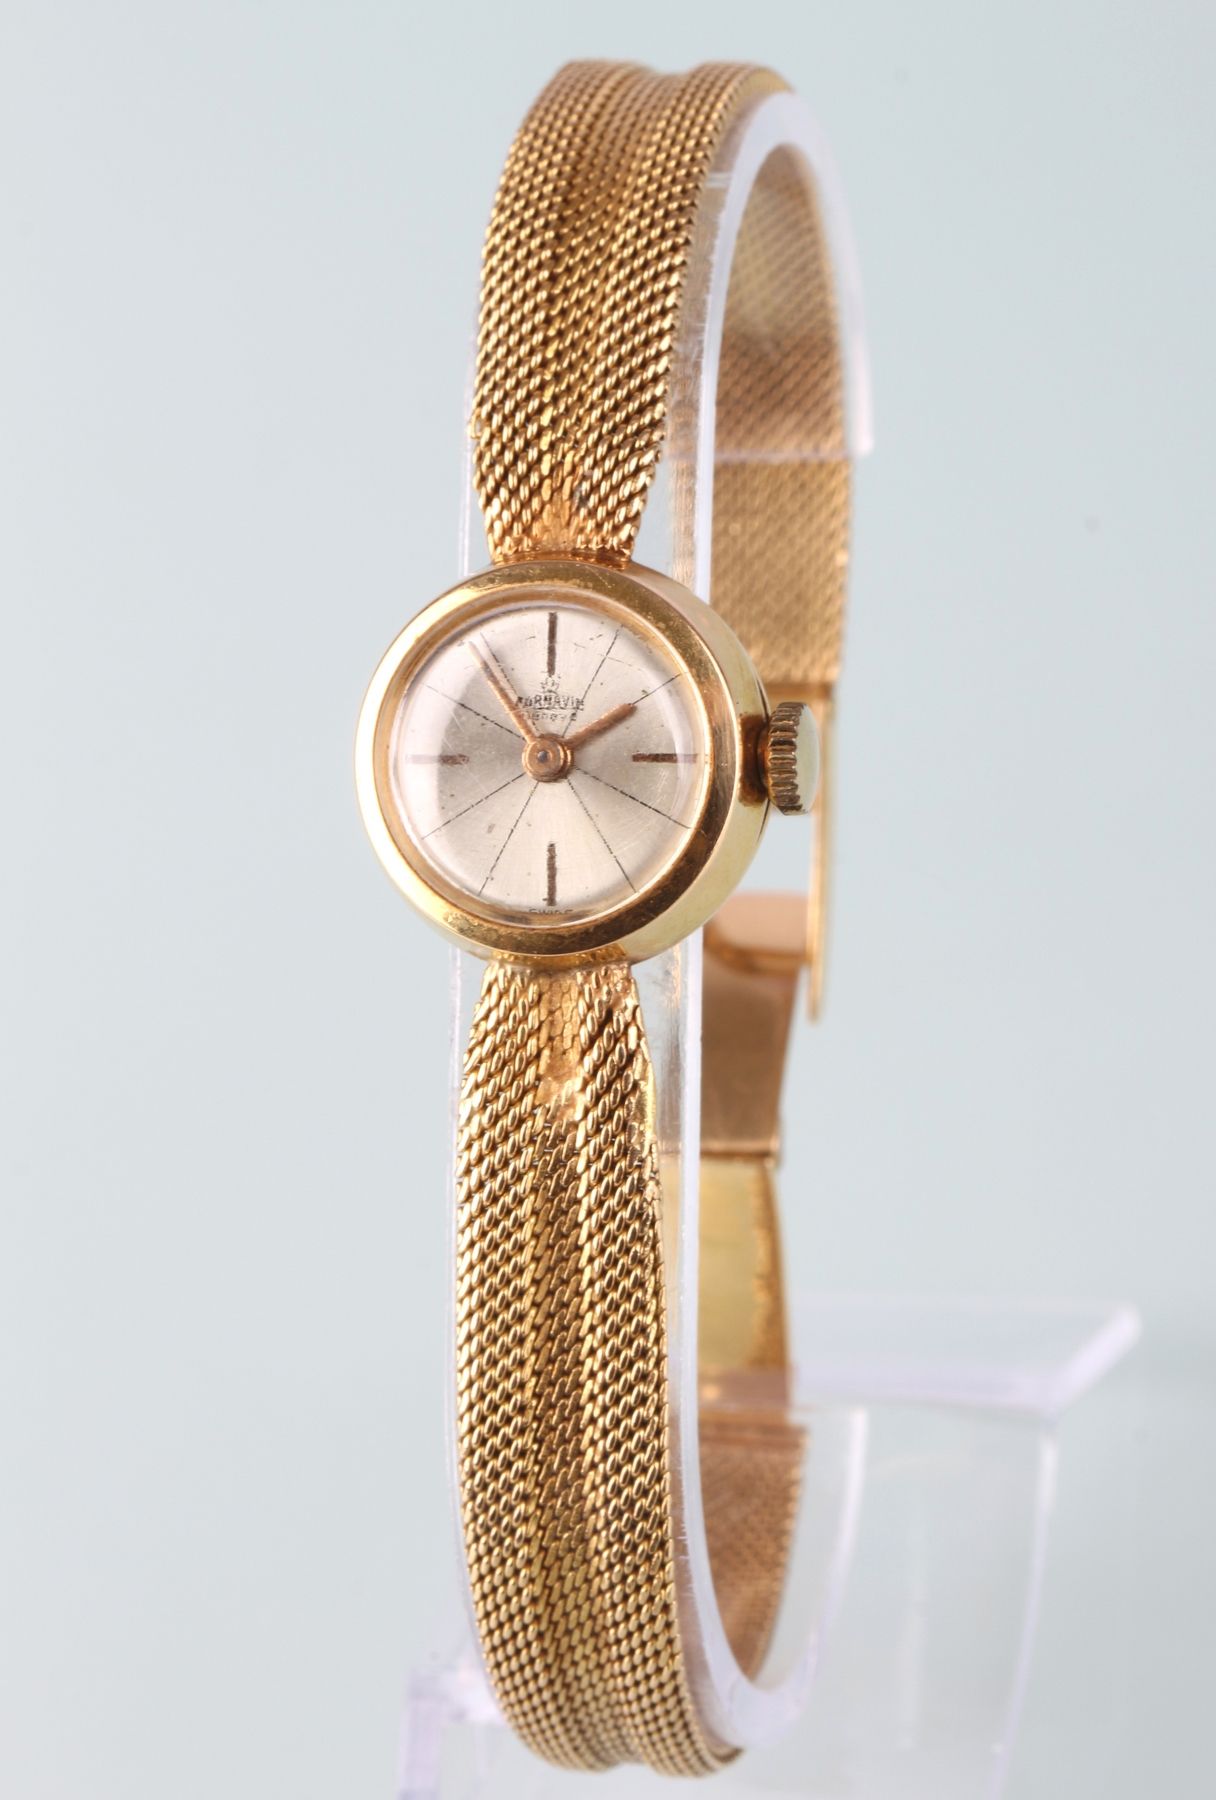 750 Gold Cornavin Geneve Armbanduhr, 18K gold wristwatch, Swiss ladies wrist wat&hellip;